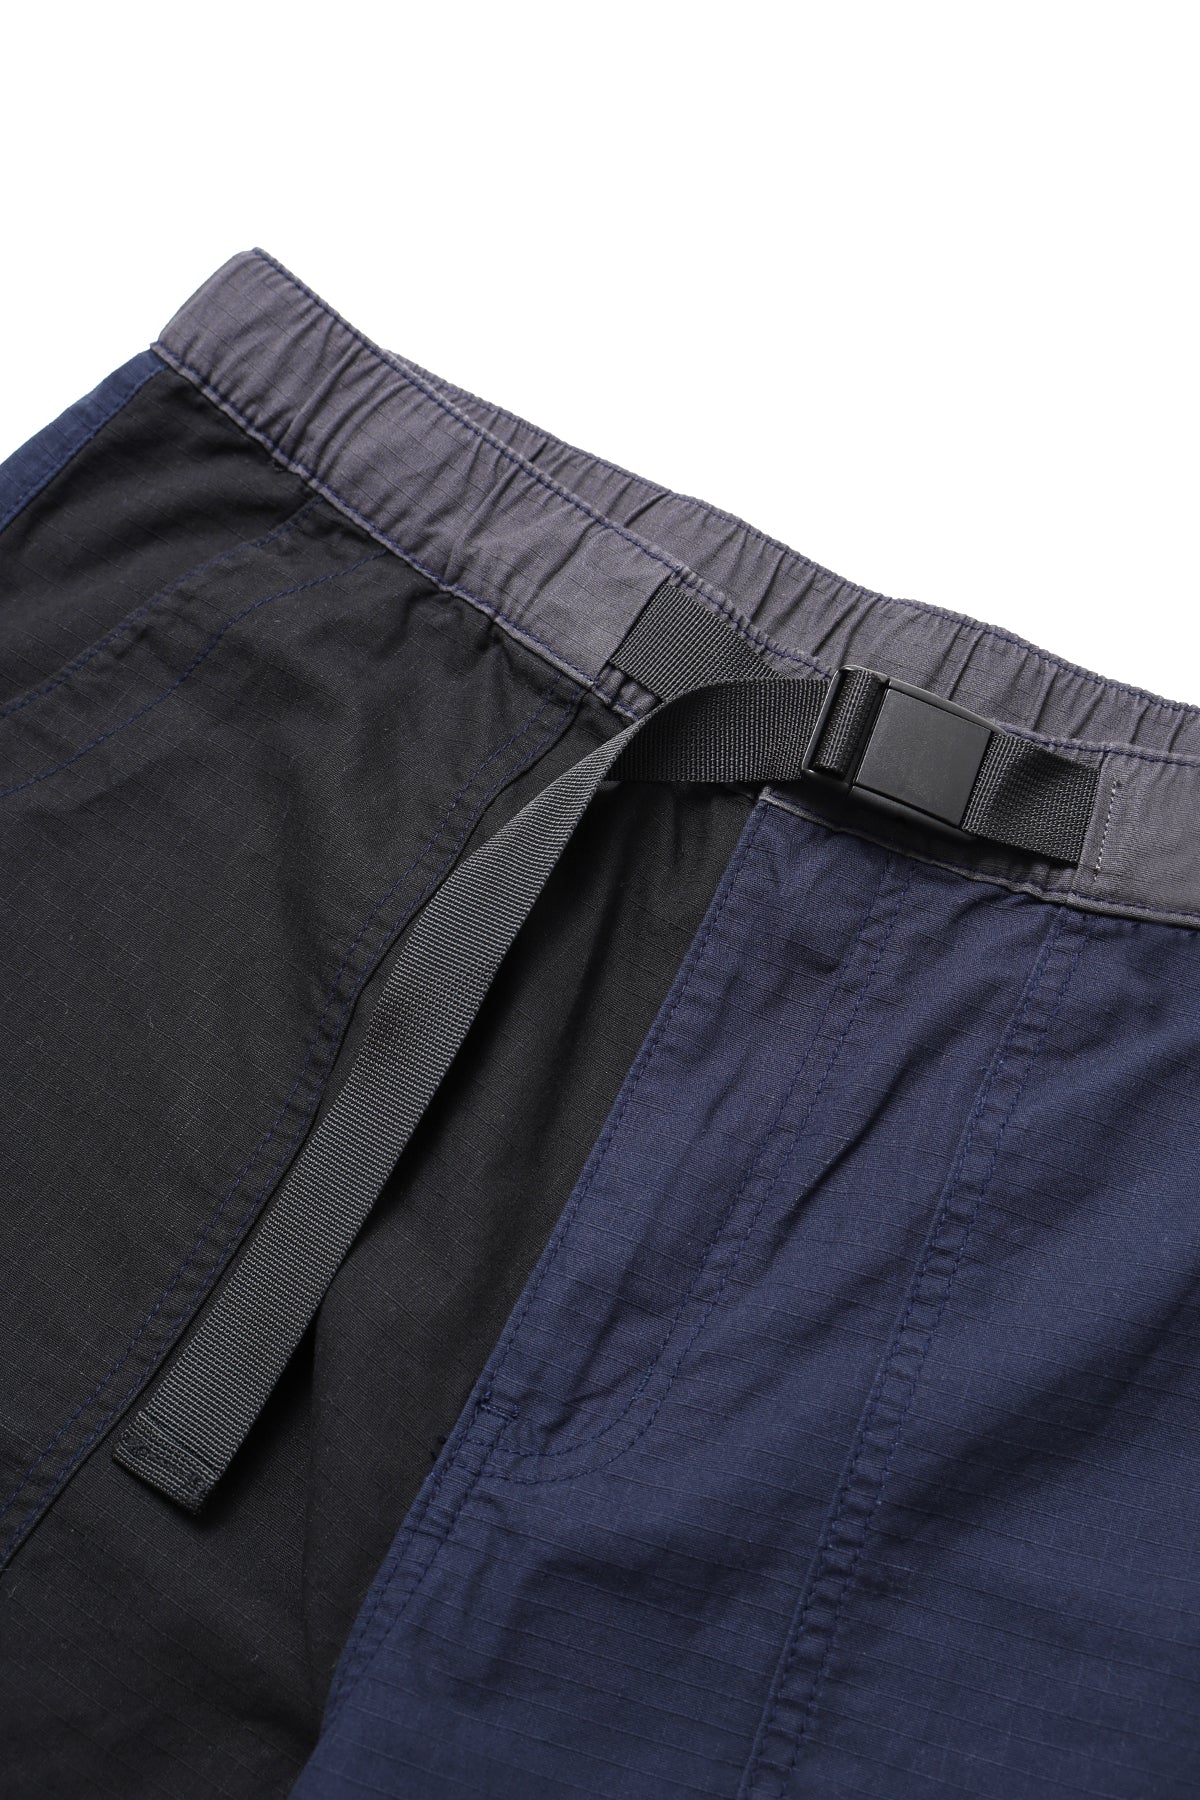 Blacksmith - Ripstop Patchwork Pants - Navy